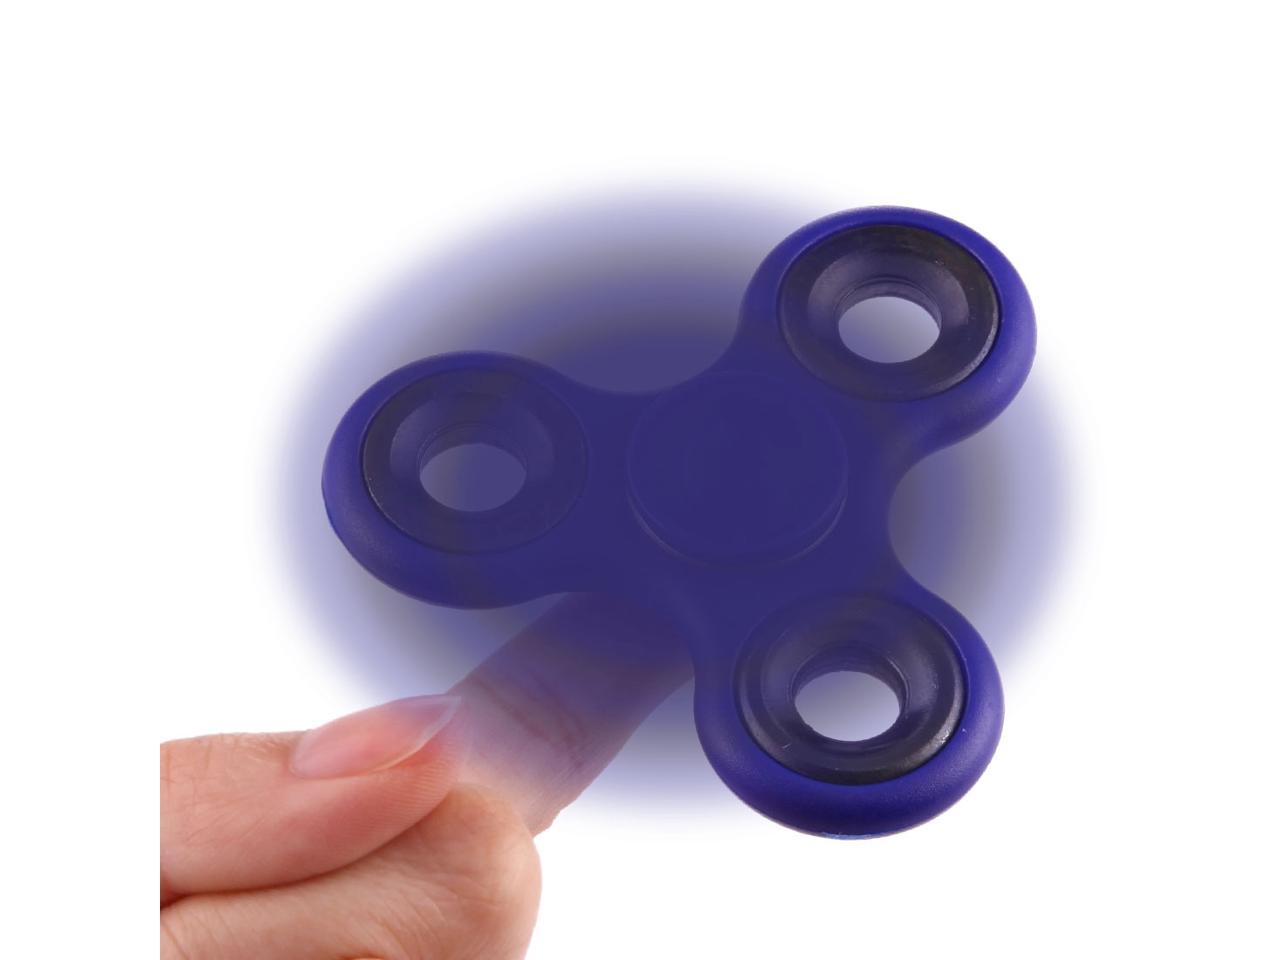 EyezOff Blue Fidget Spinner ABS Material 1.5-min Rotation Time, Steel Beads Bearing